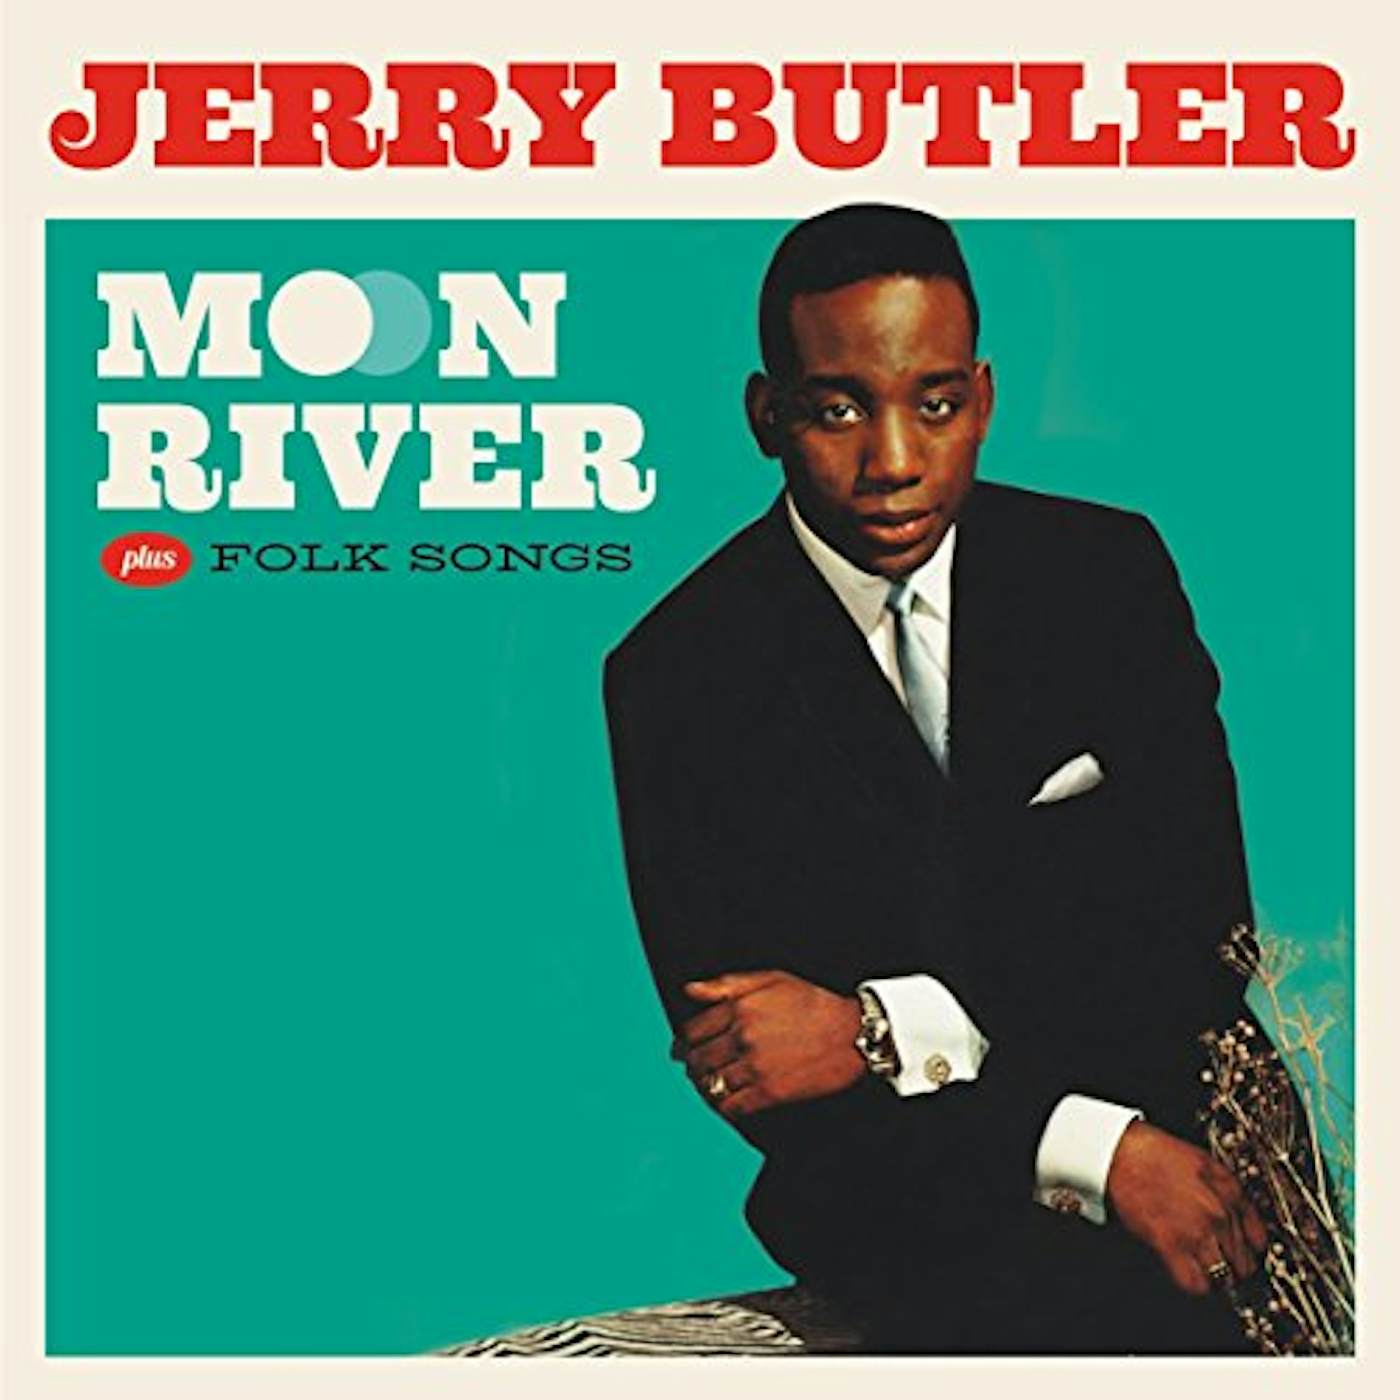 Jerry Butler MOON RIVER / FOLK SONGS CD